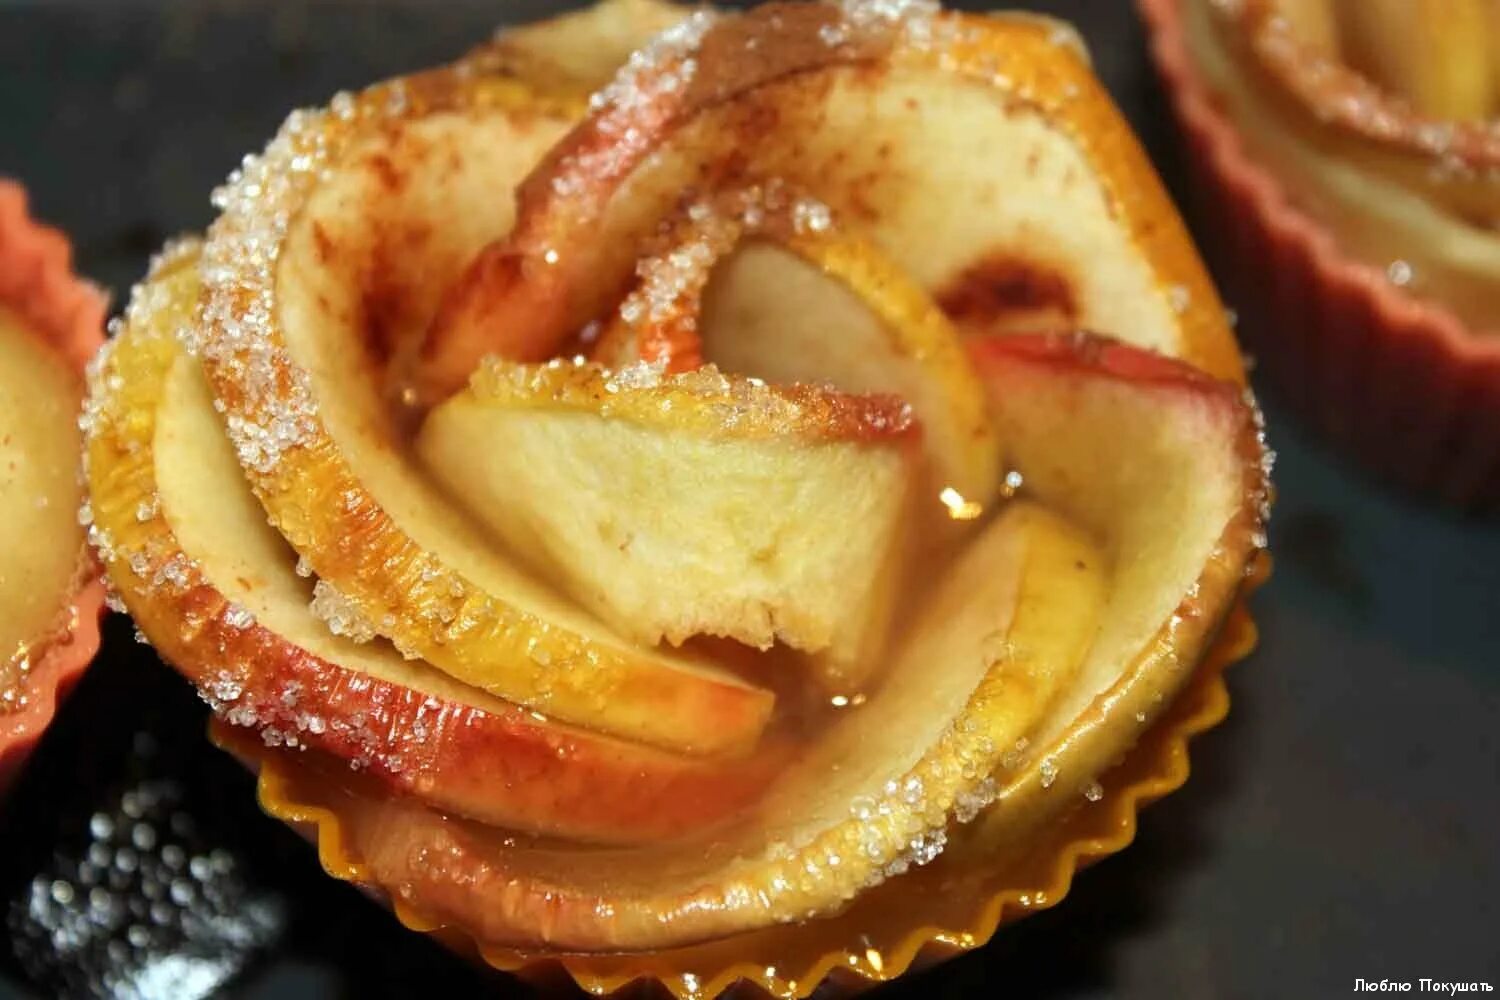 Рецепт начинки из свежих яблок. Блюда из яблок. Сладкие блюда из яблок. Розочки из яблок. Необычные блюда из яблок.